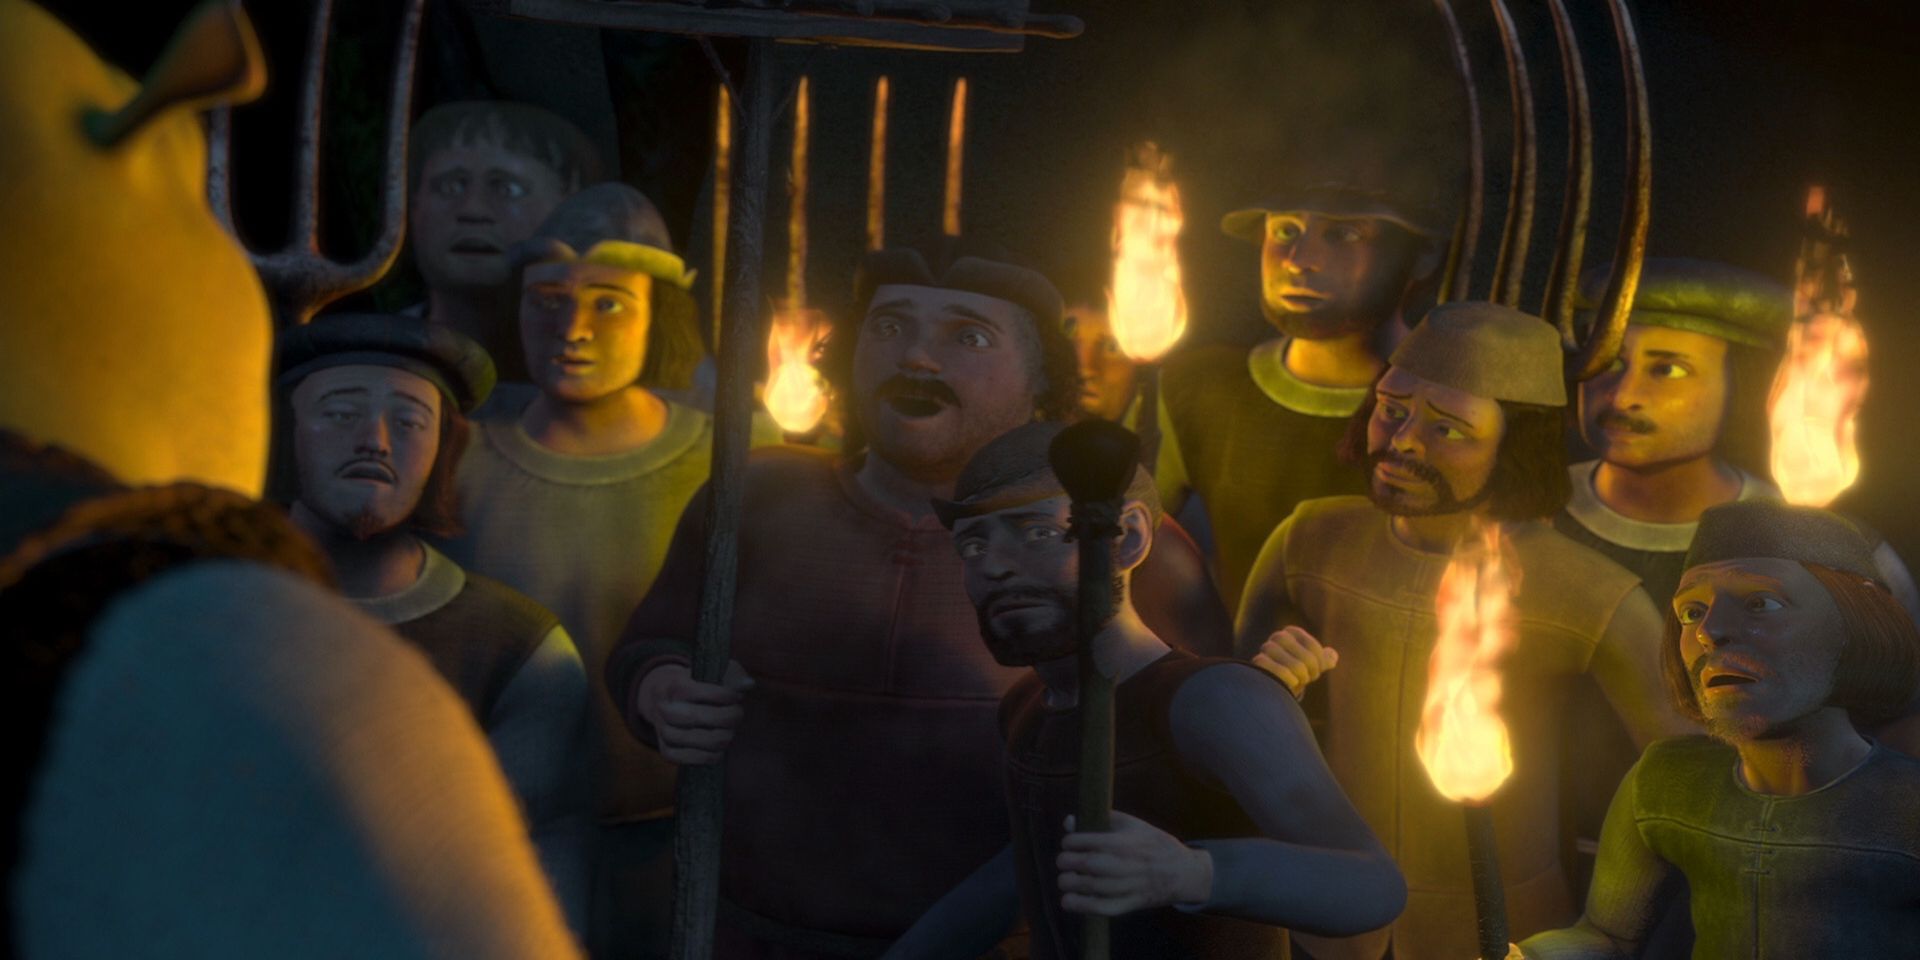 A group of pitchfork-baering villagers in the original Shrek movie.